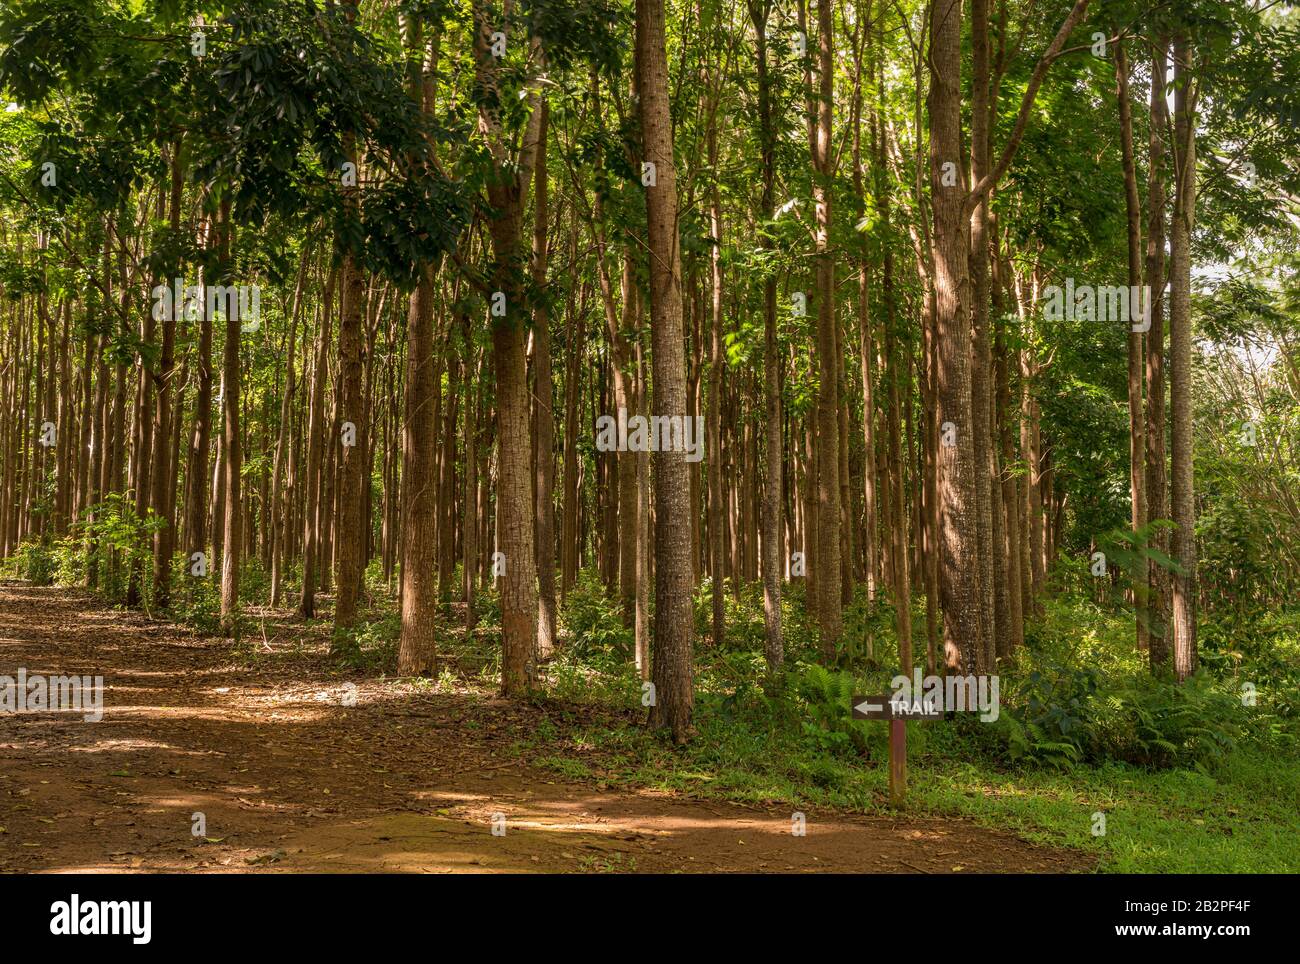 Pathway of the Wai Koa Loop trail or track leads through plantation of Mahogany trees in Kauai, Hawaii, USA Stock Photo